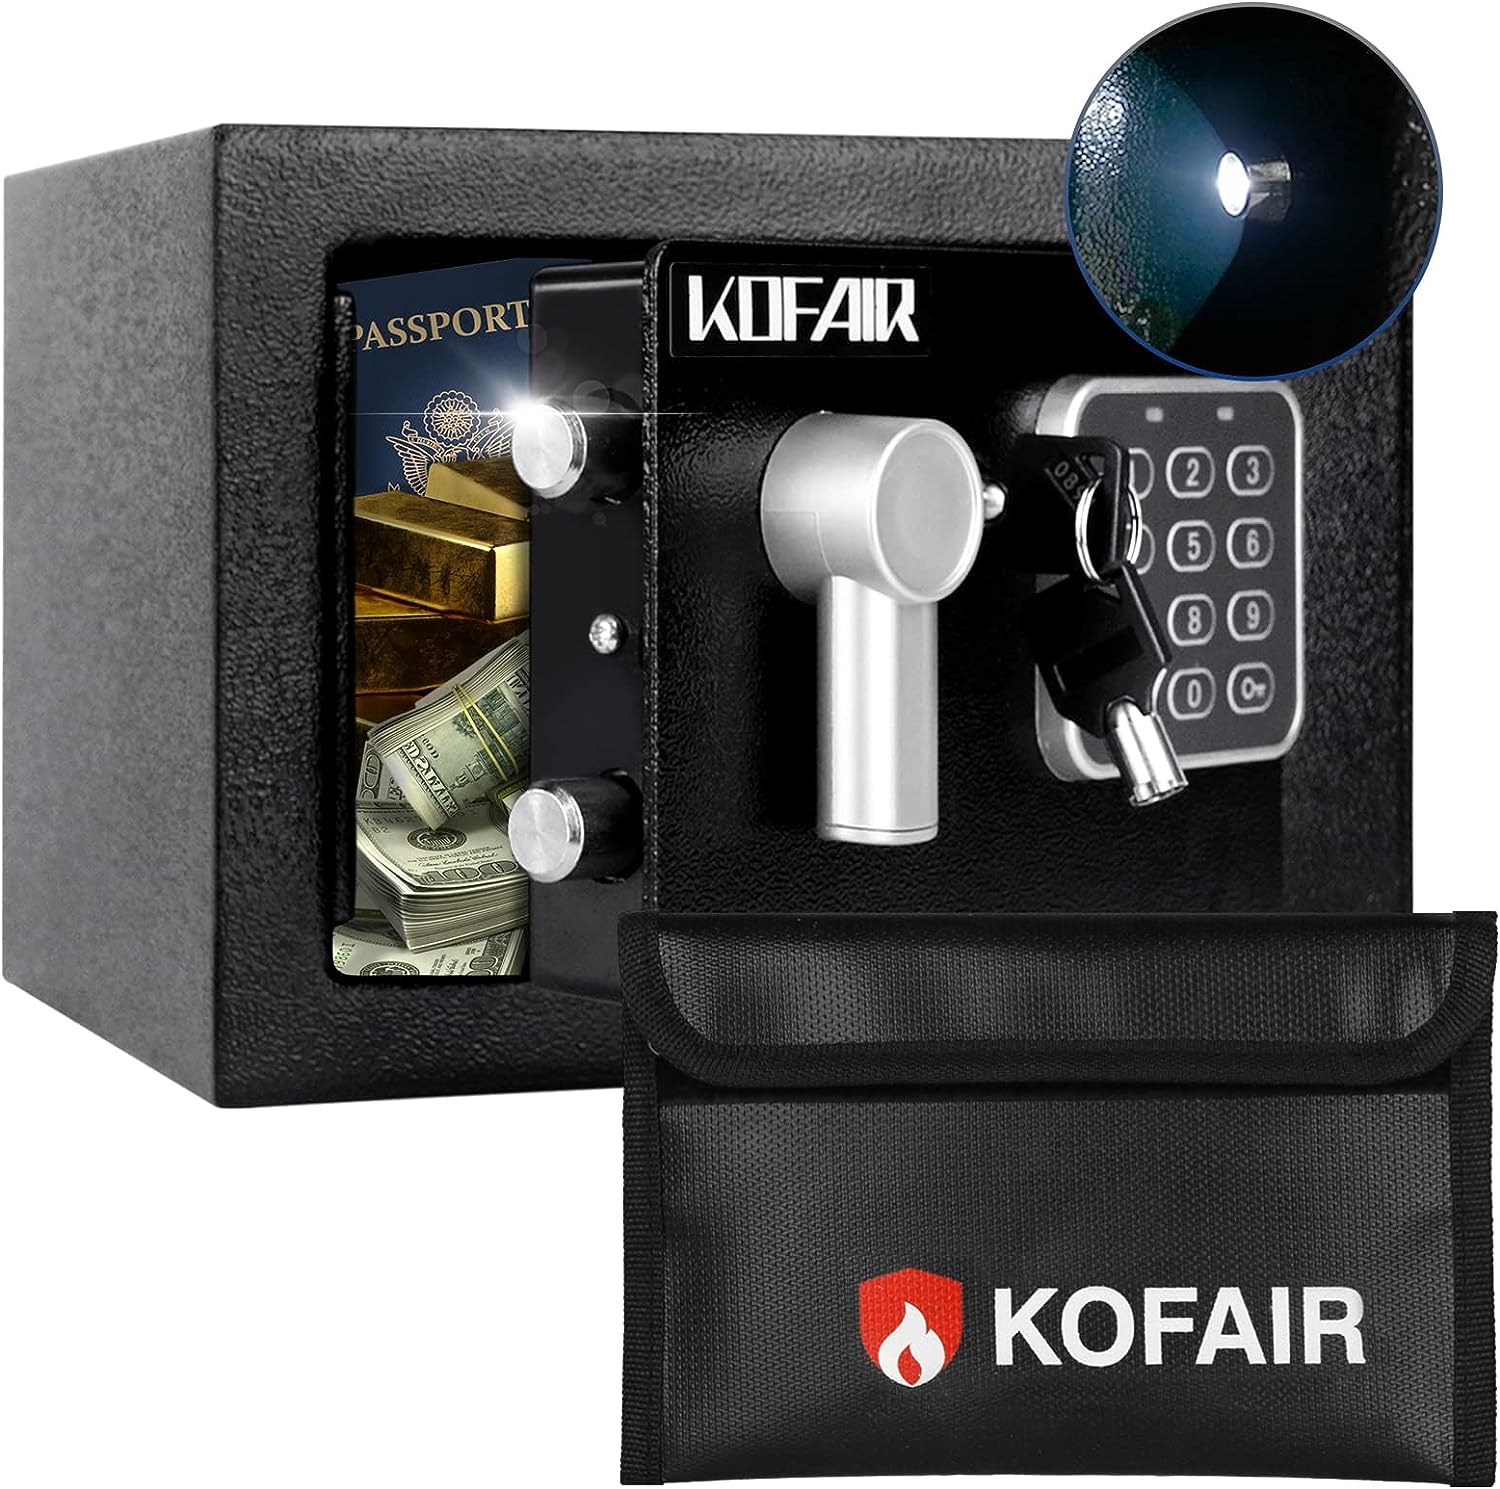 KOFAIR Small Personal Safe Box